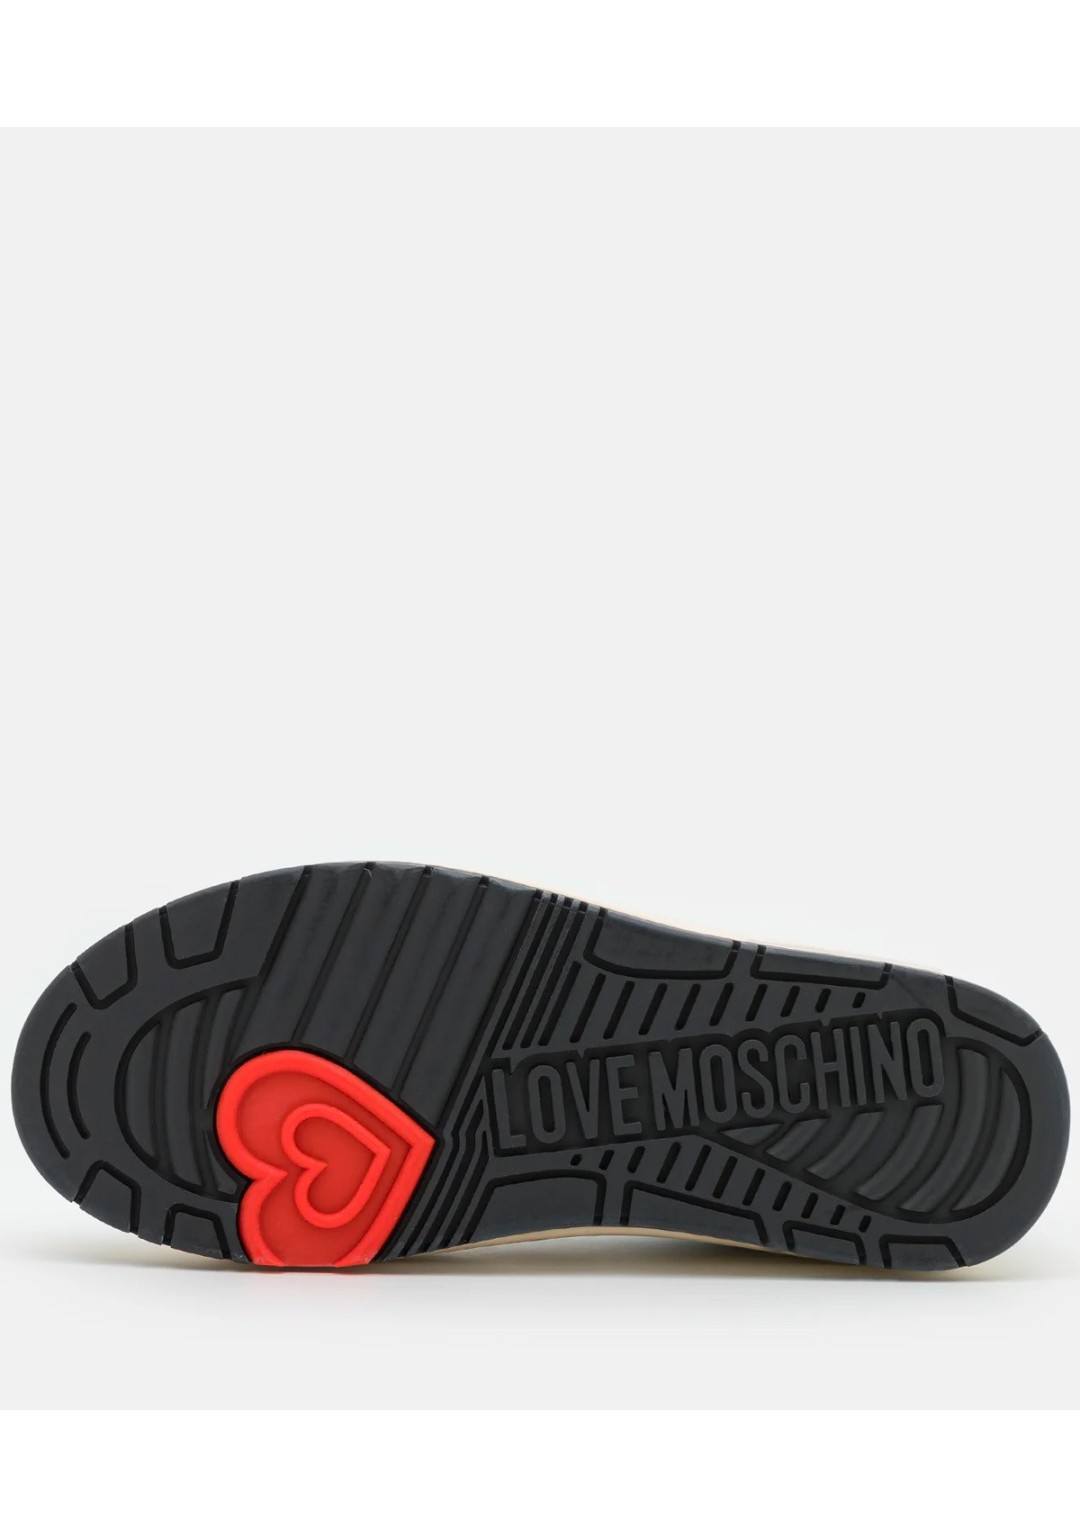 LOVE MOSCHINO - Sneaker Rip.Nero - Donna - JA15426